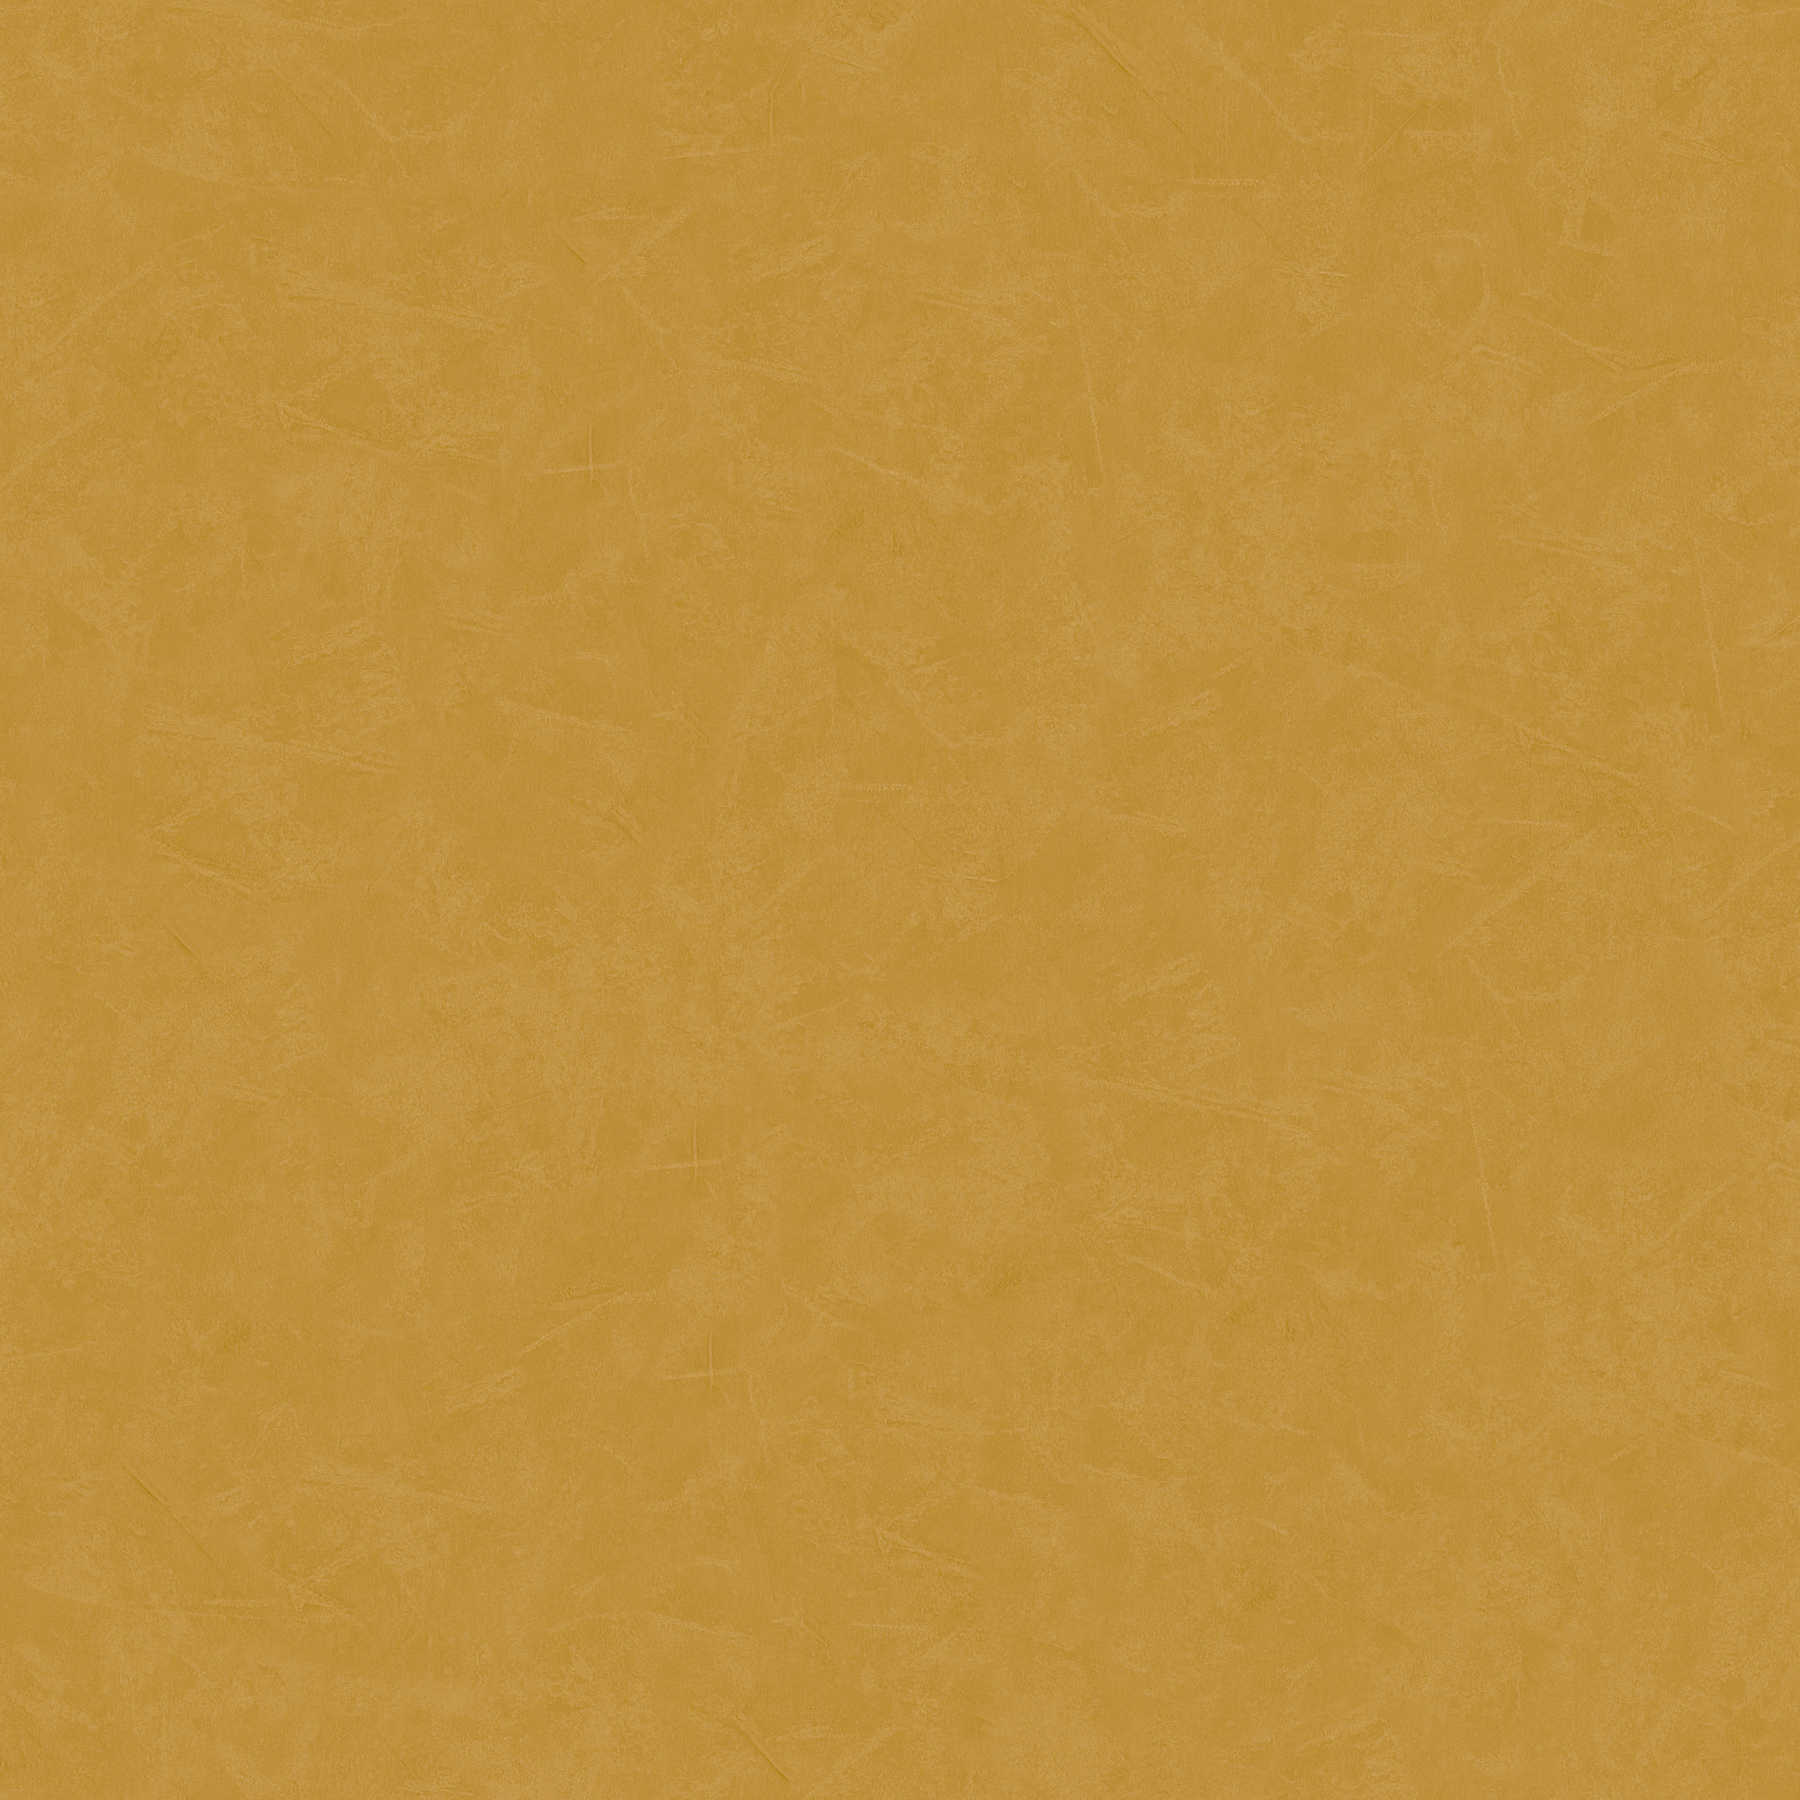         Non-woven wallpaper plains with plaster look & texture pattern - yellow, ocher
    